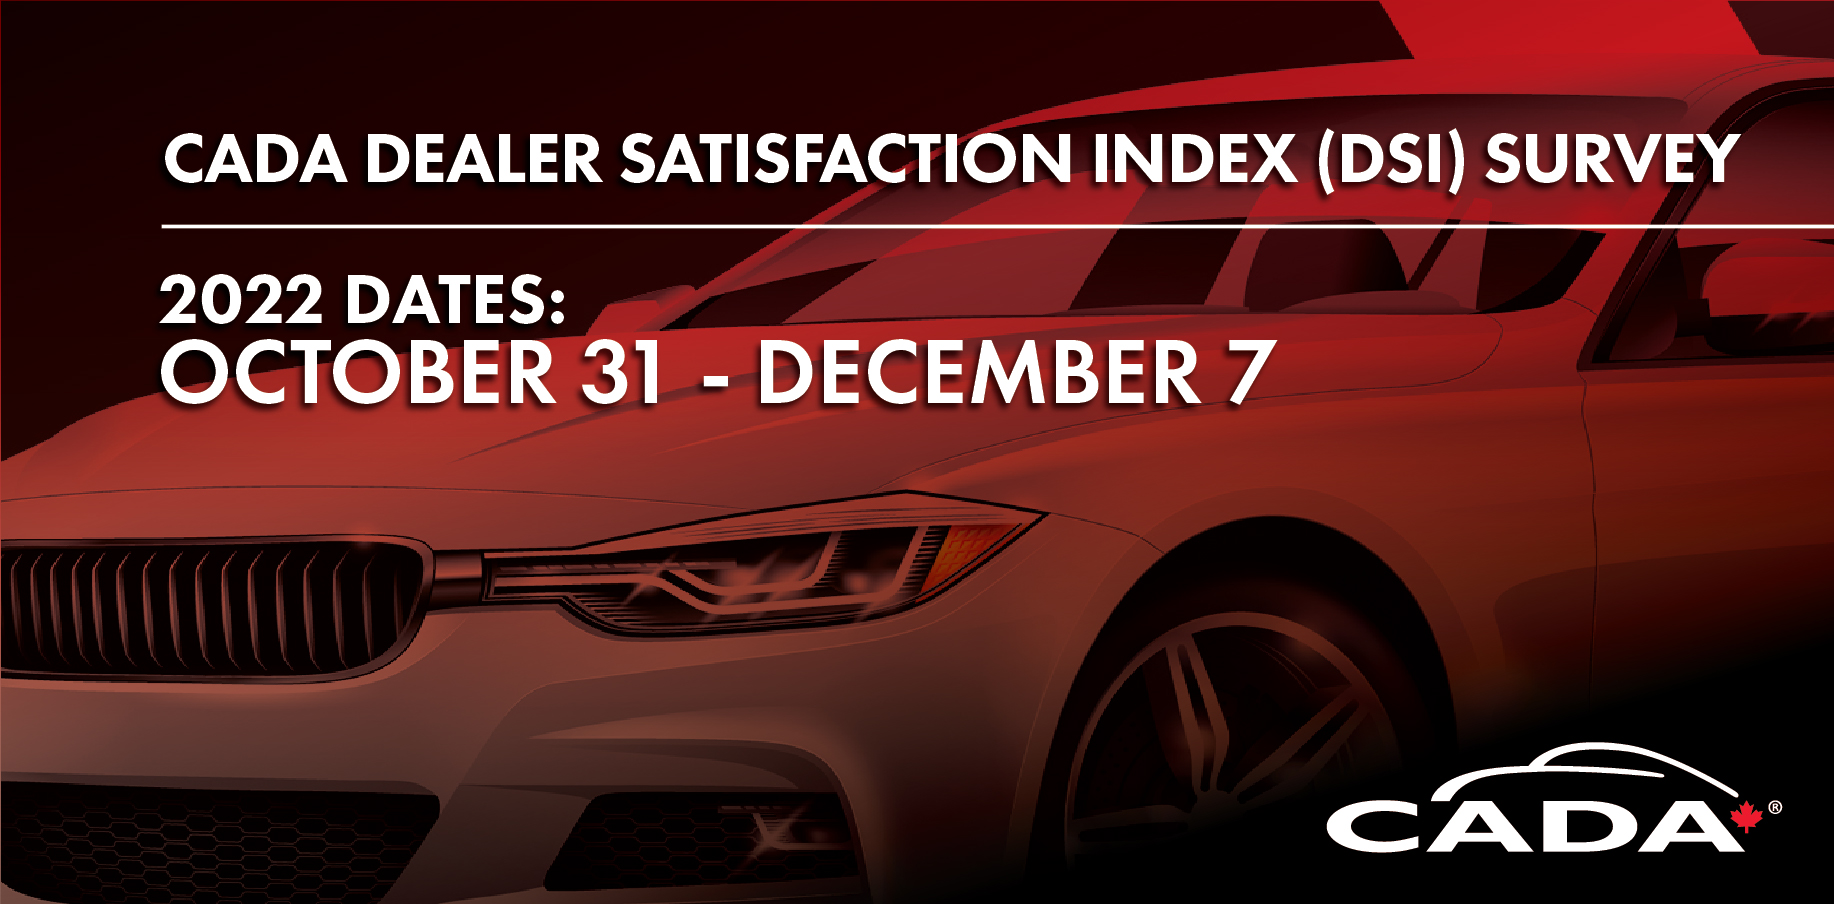 2022 CADA Dealer Satisfaction Index Survey starts October 31st